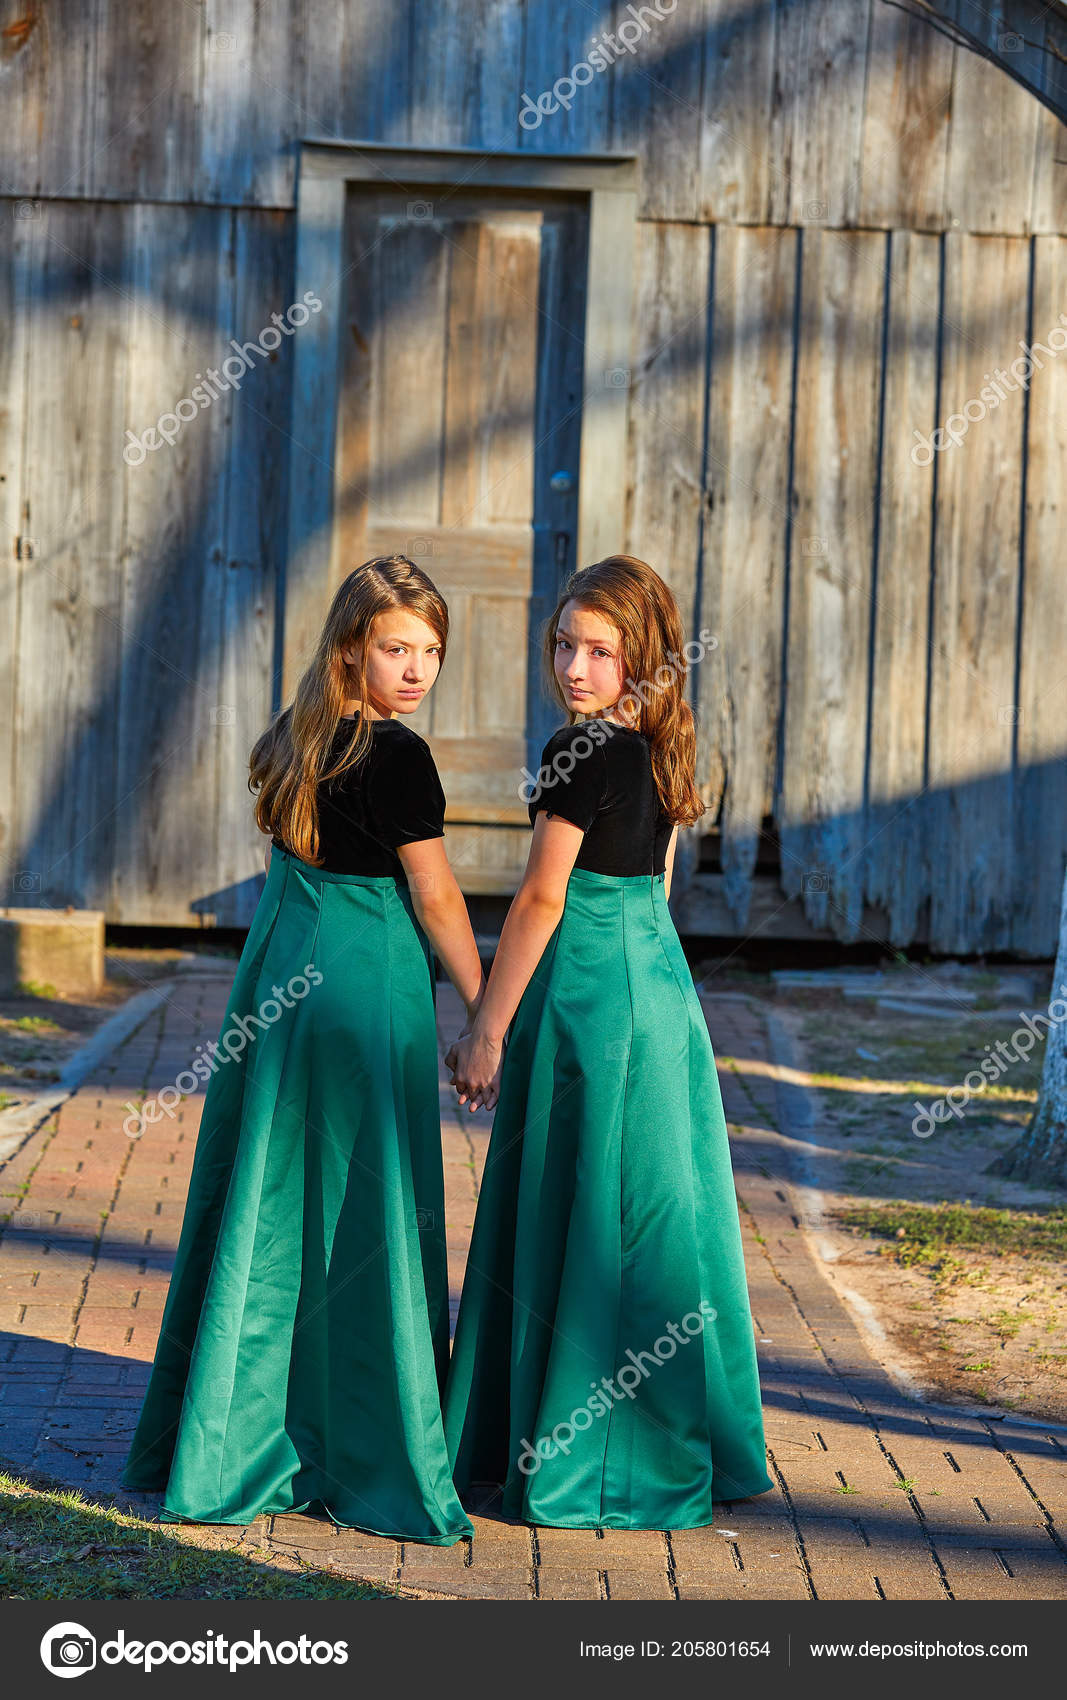 twins dress